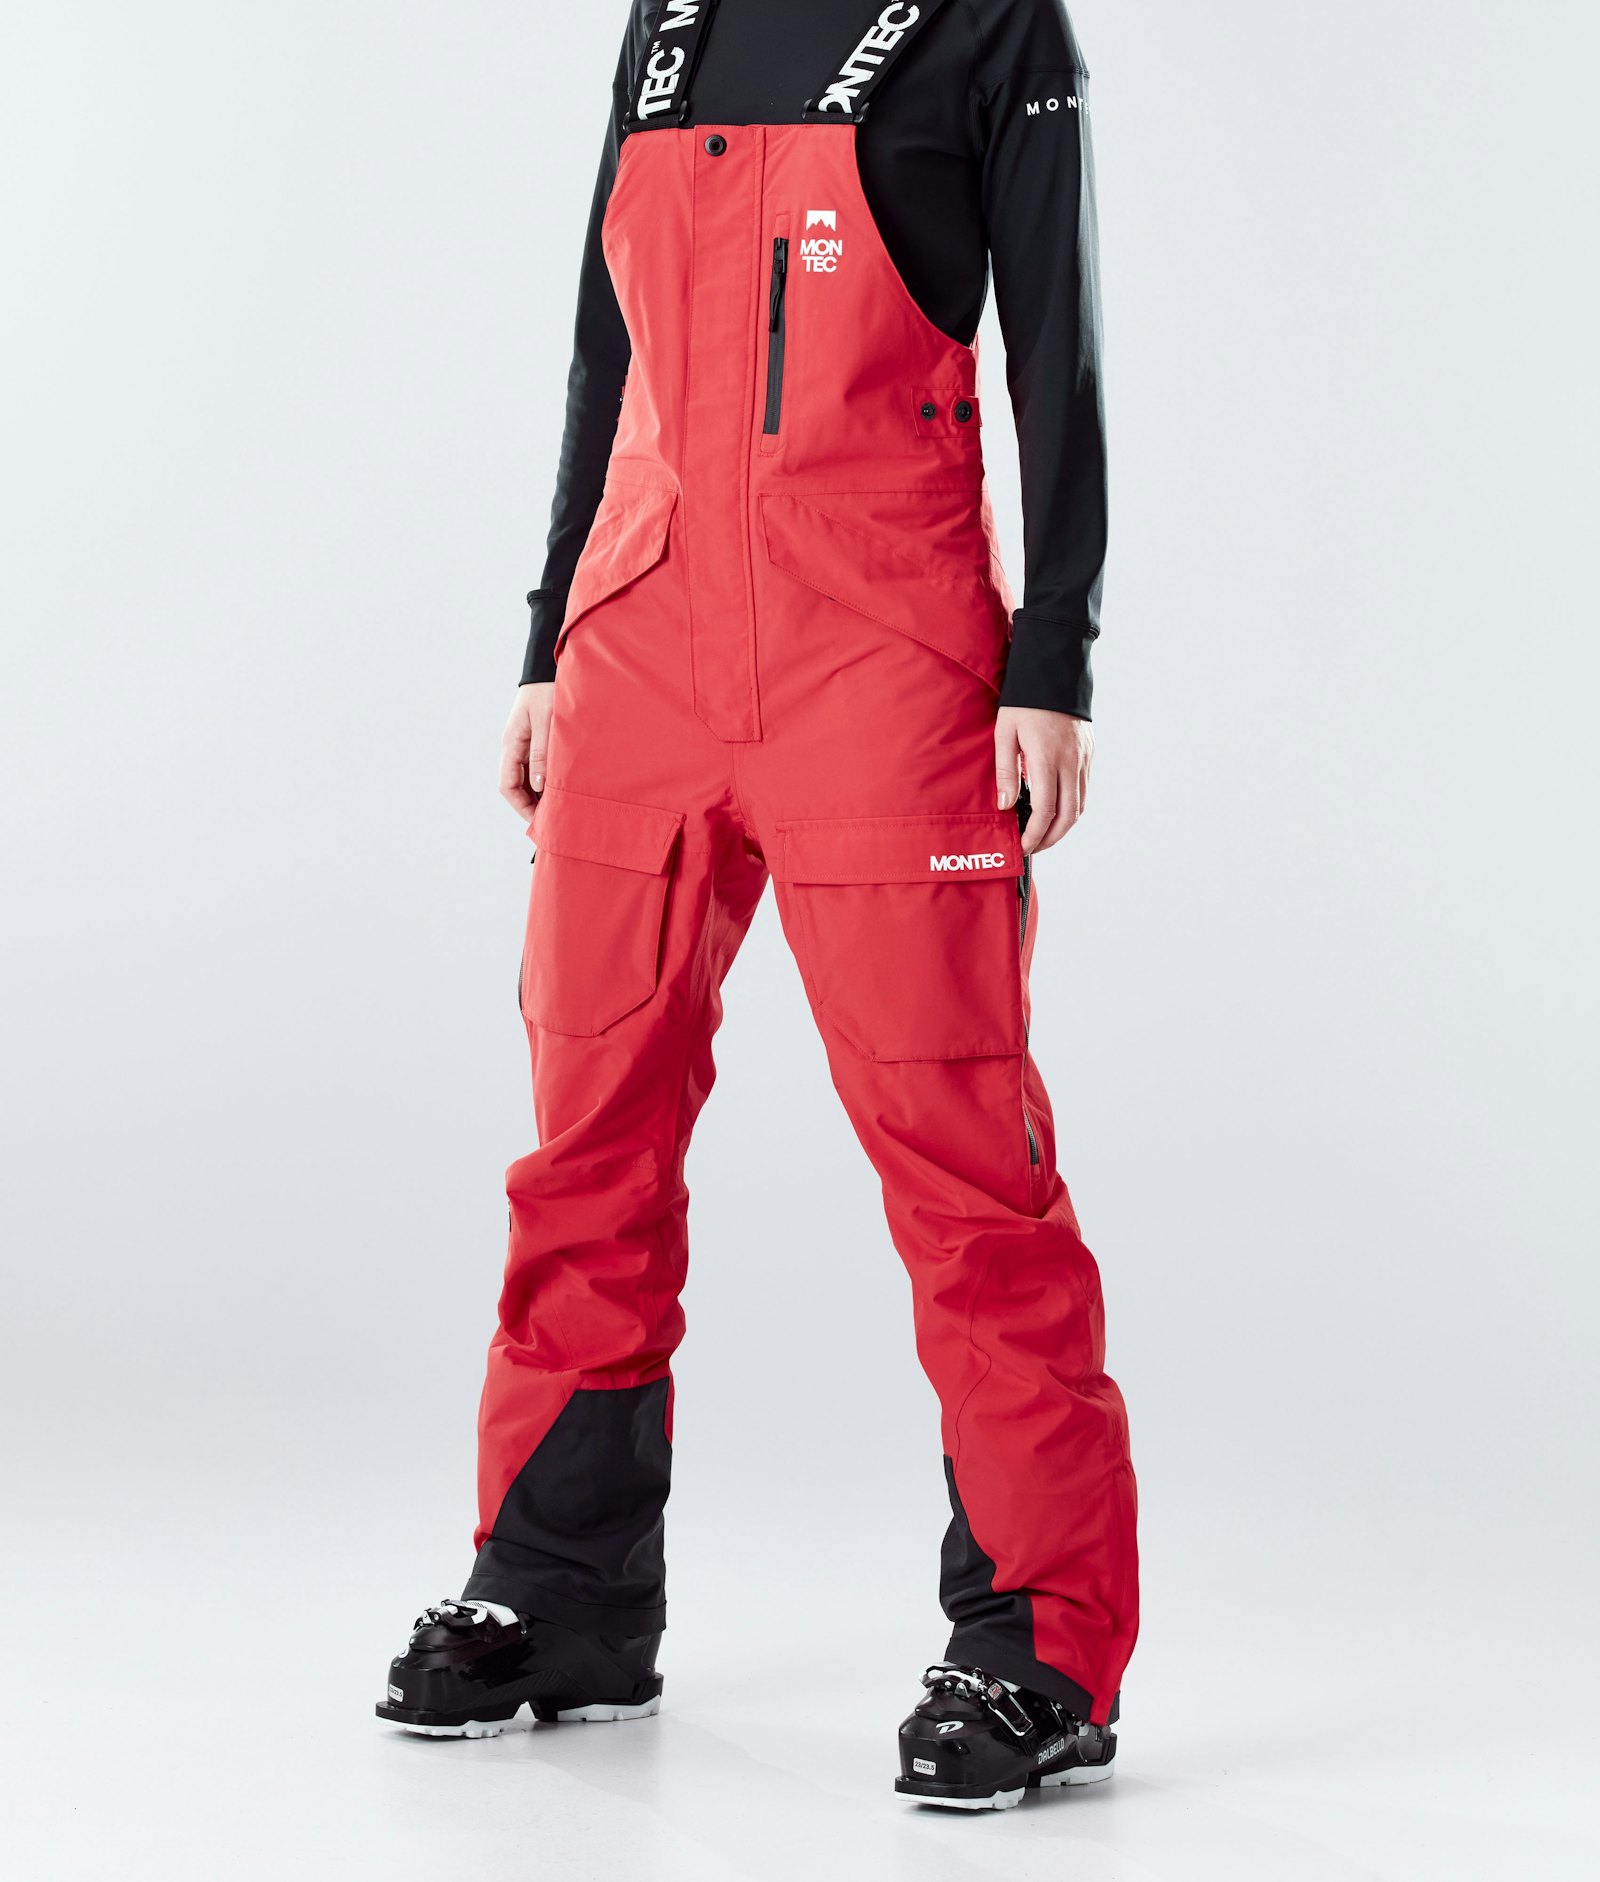 Fawk W 2020 Pantalon de Ski Femme Red